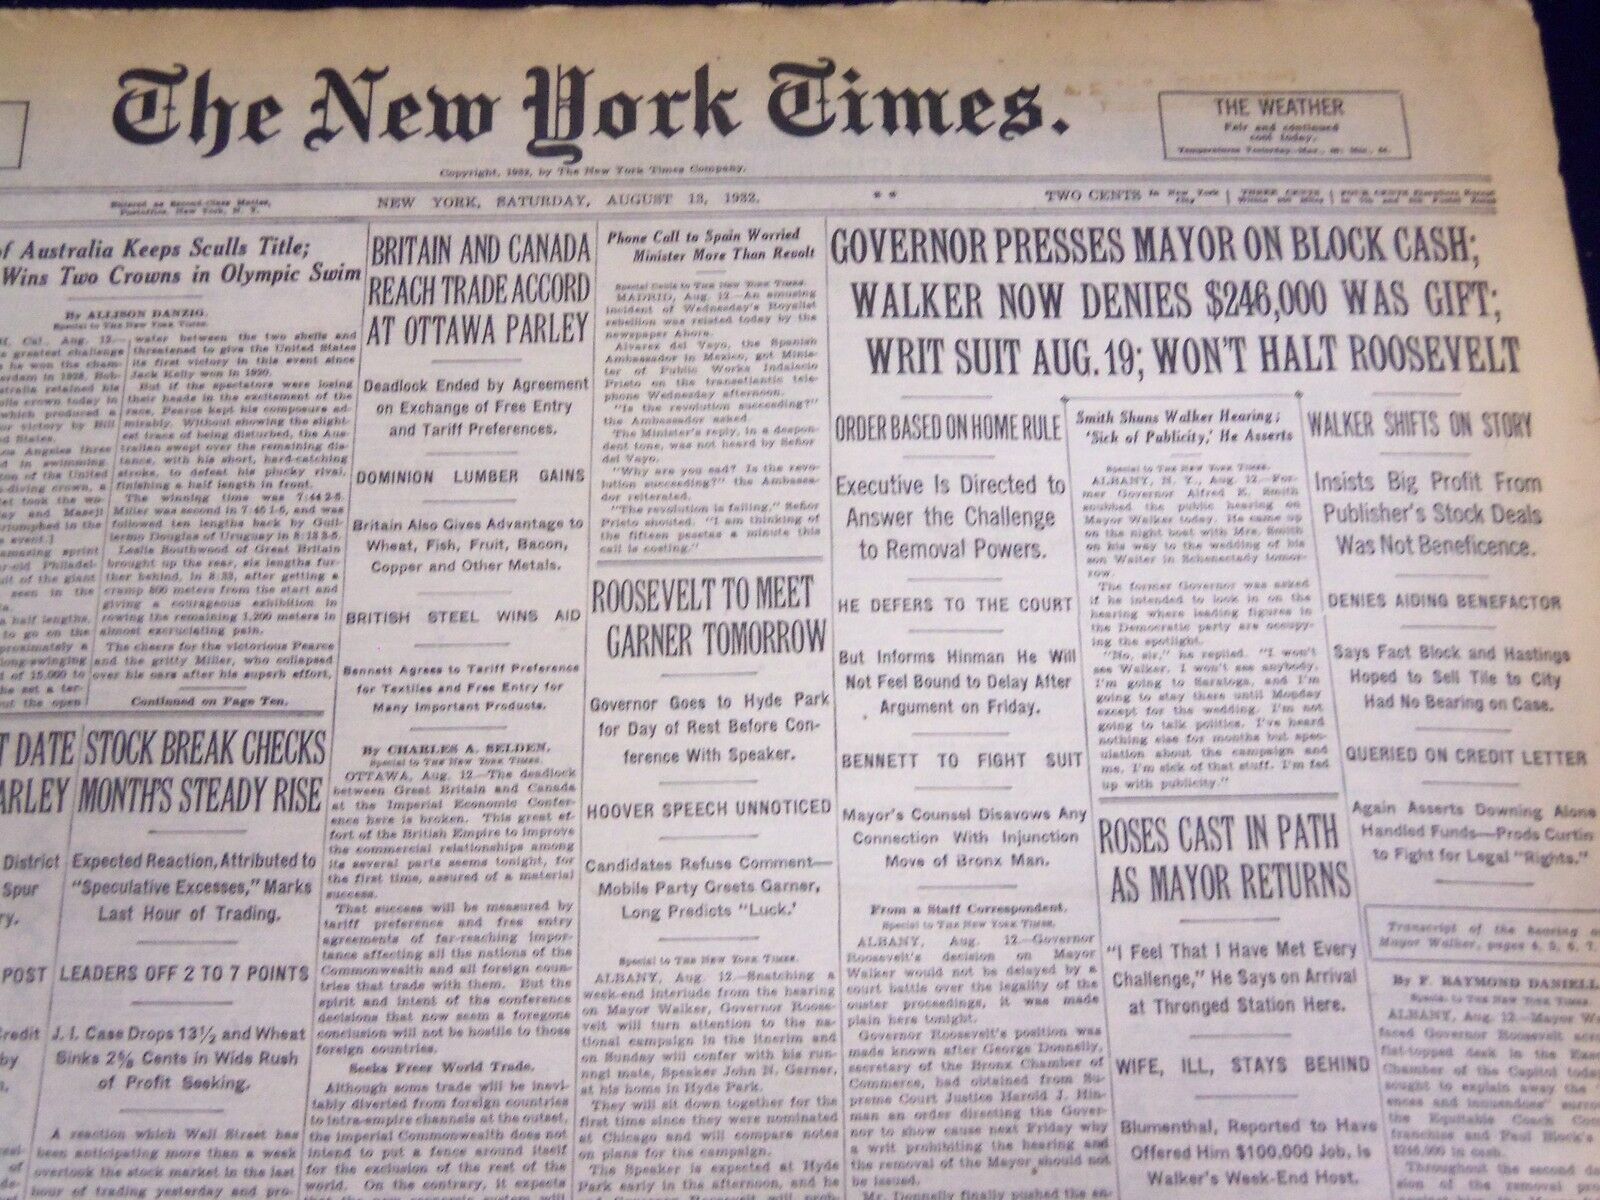 1932 AUGUST 13 NEW YORK TIMES - WALKER DENIES $246,000 WAS GIFT - NT 4112